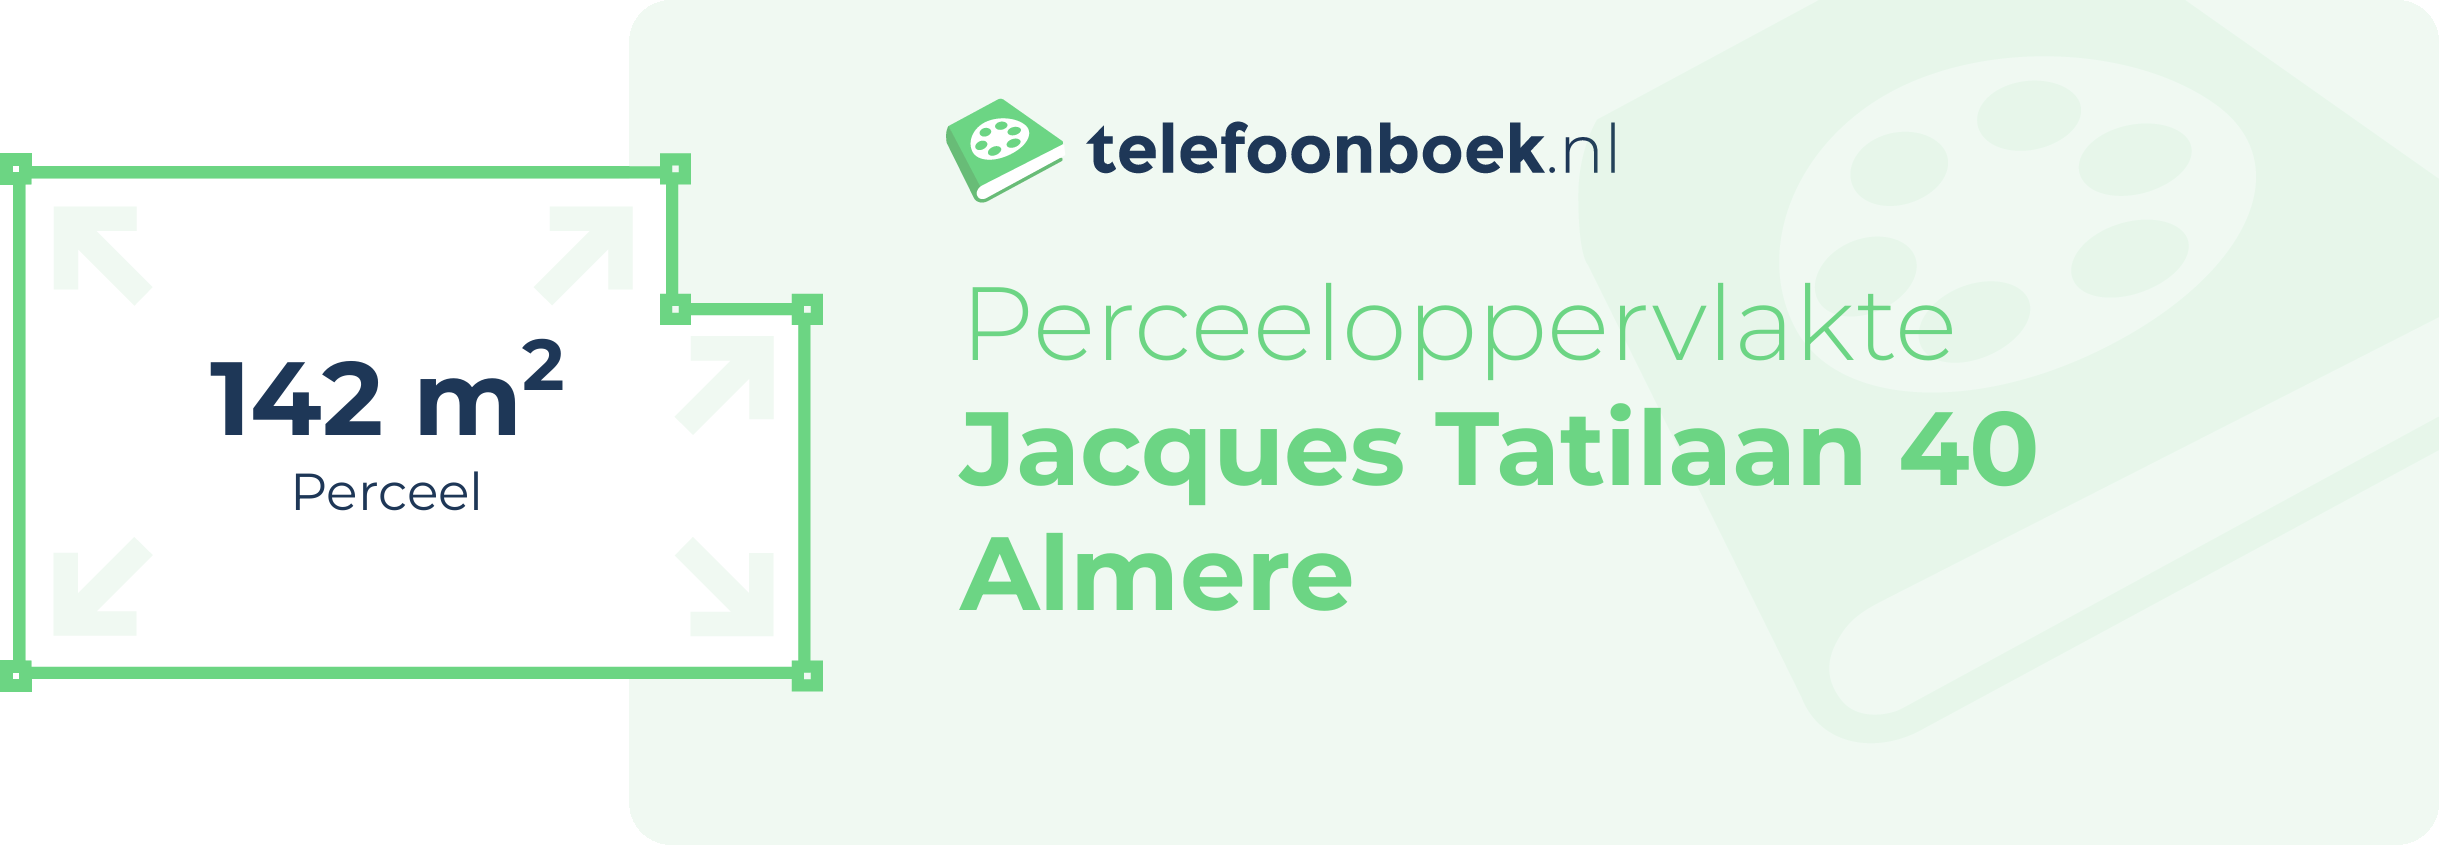 Perceeloppervlakte Jacques Tatilaan 40 Almere